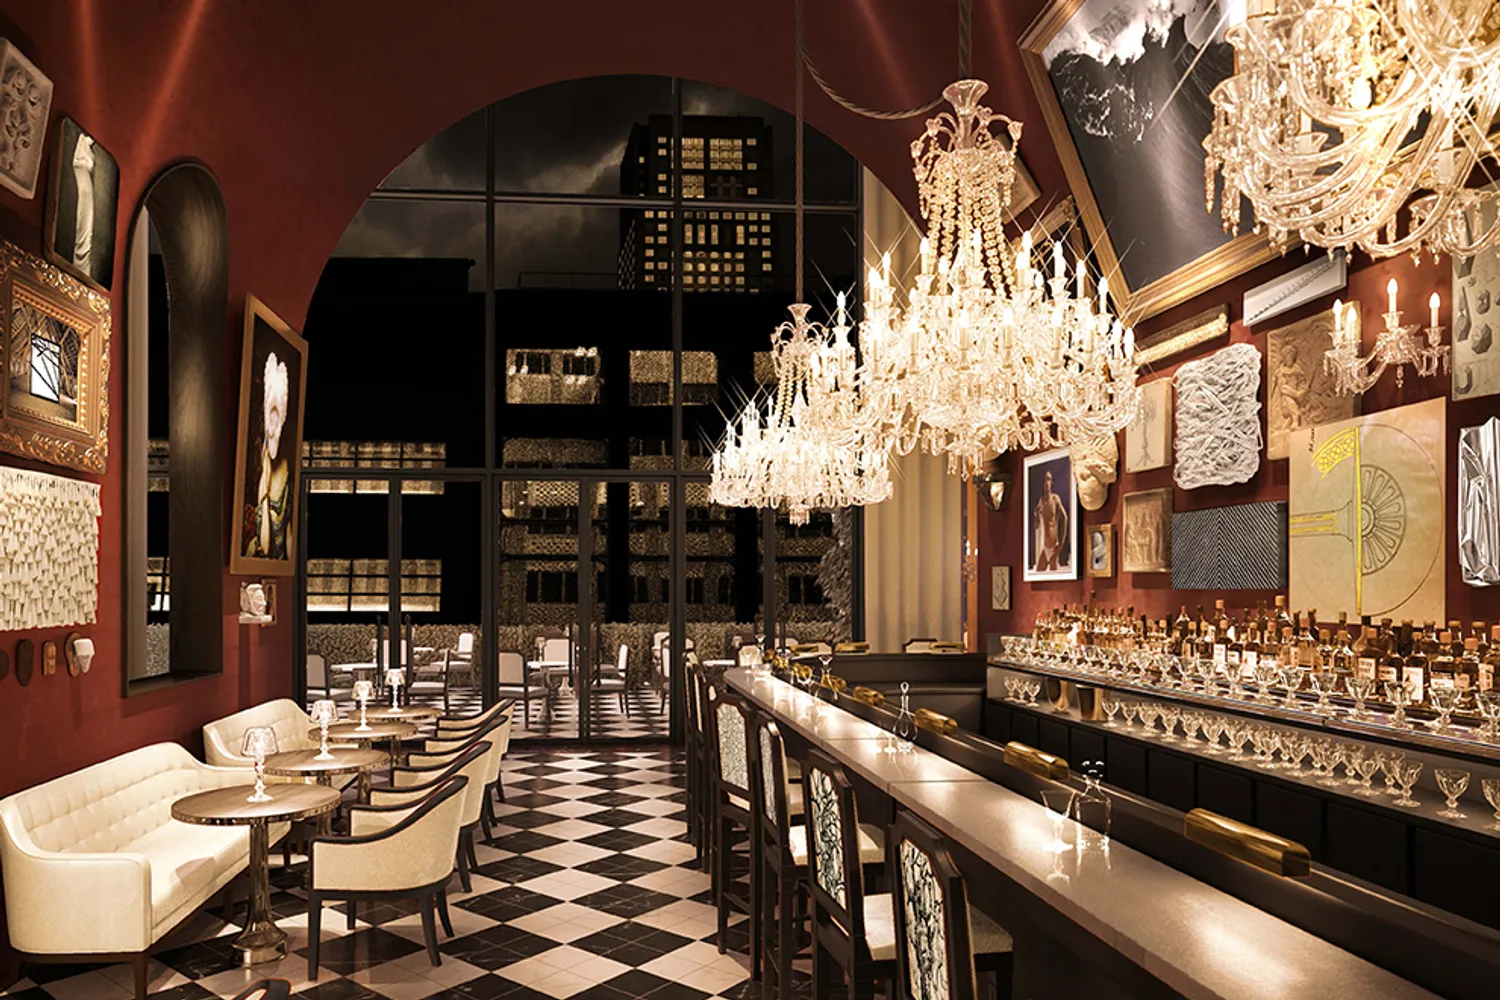 Hotel Bar designed by Gilles and Boissier